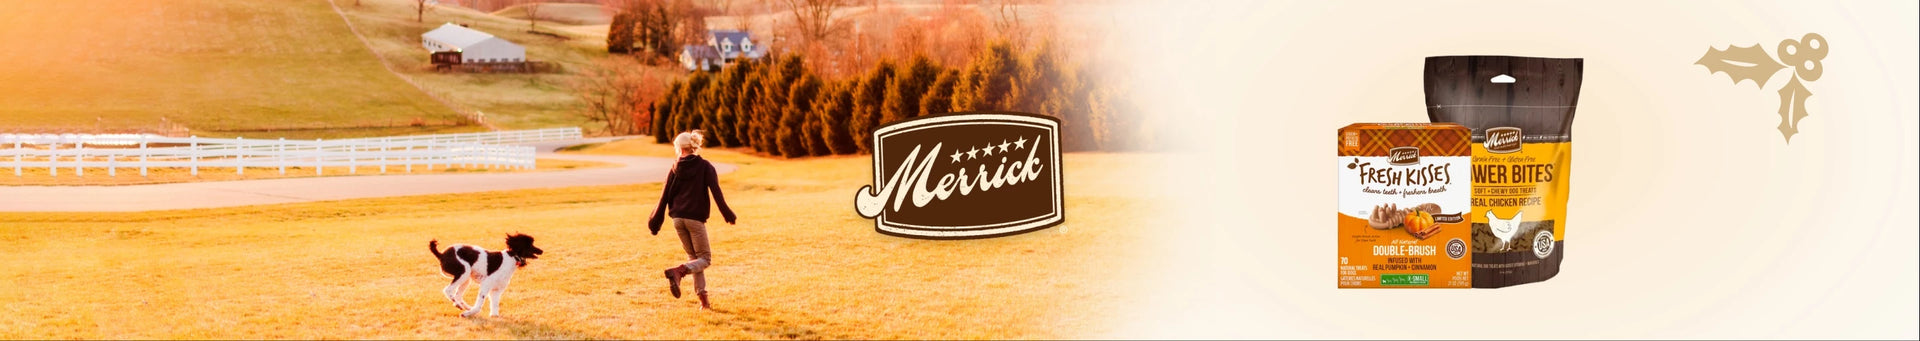 Merrick (SALE)